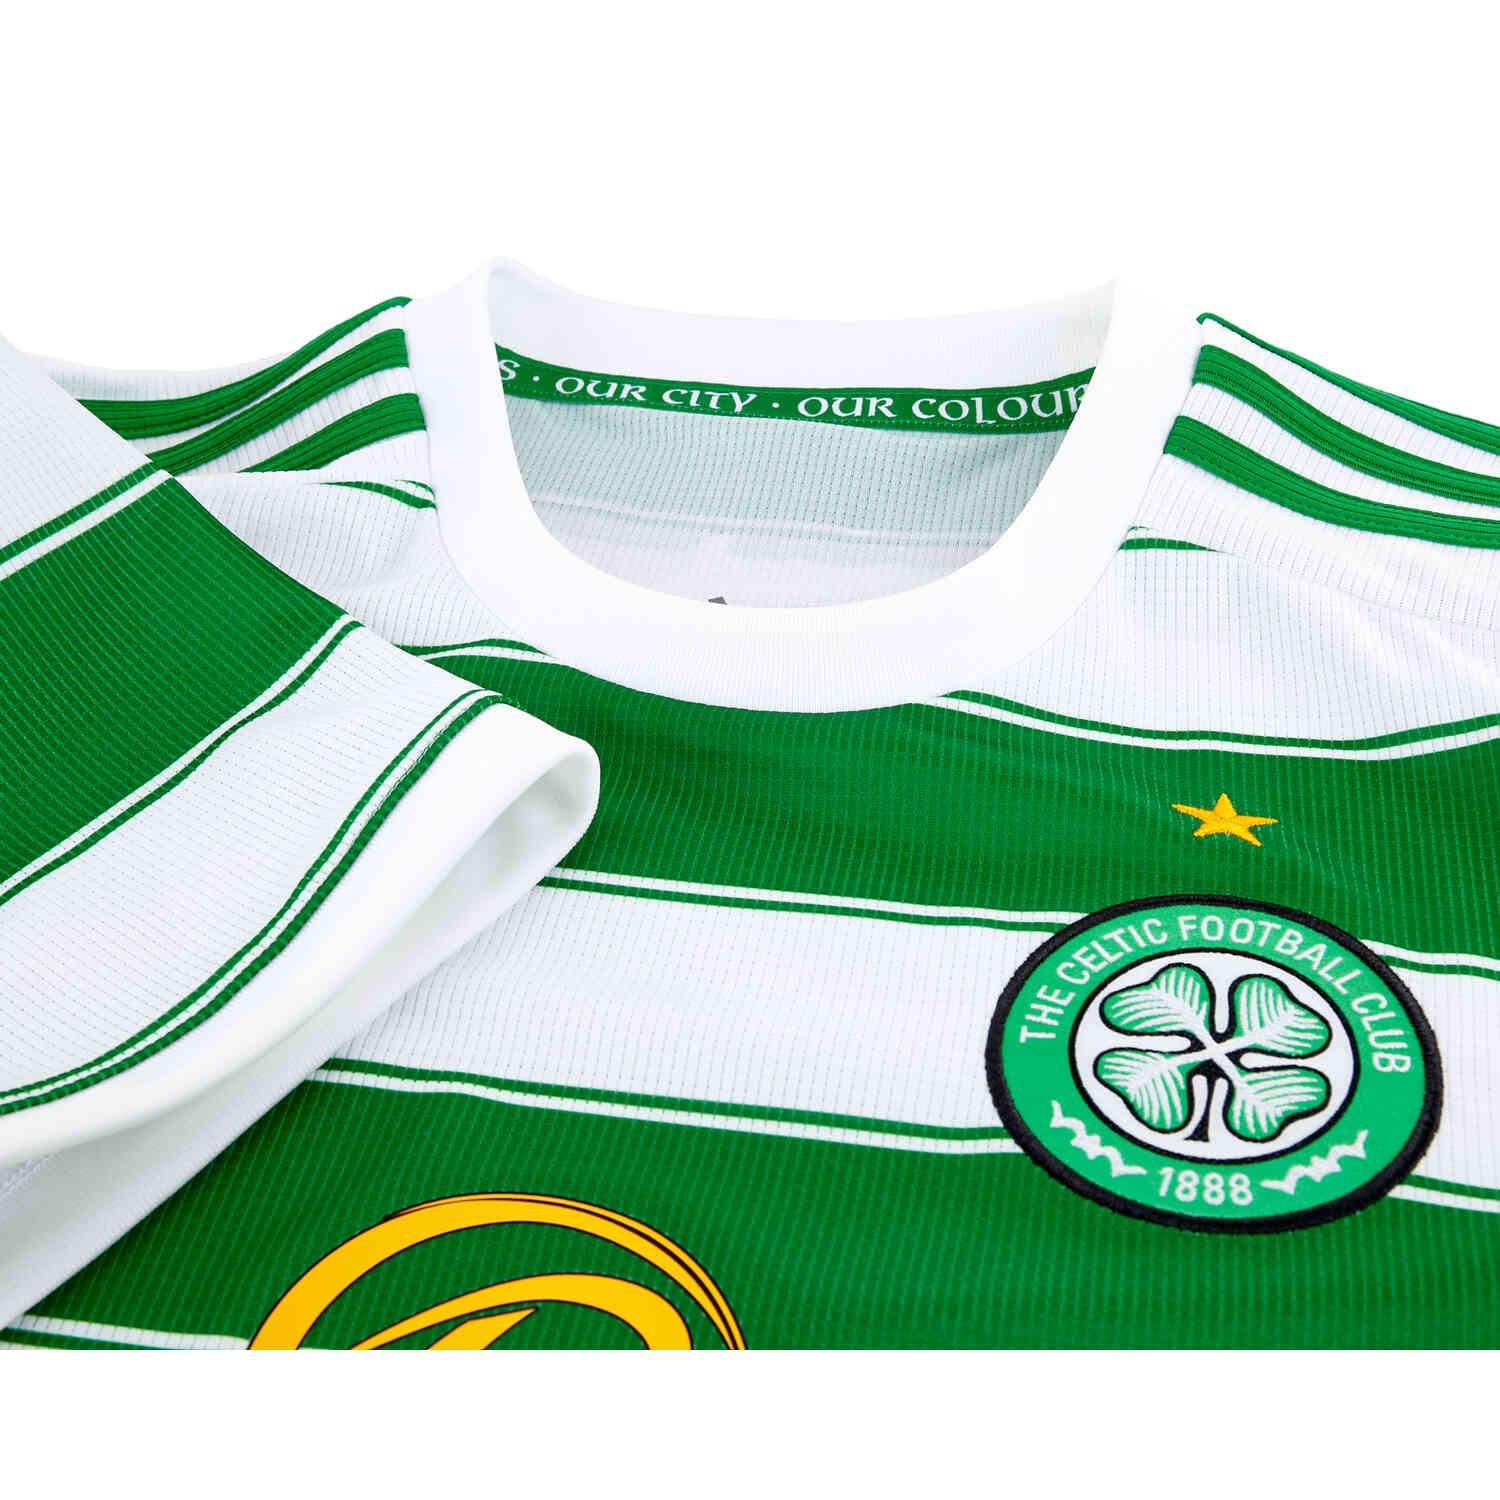 adidas Men's Celtic FC 21-22 Away Soccer Jersey - ShopStyle Shirts